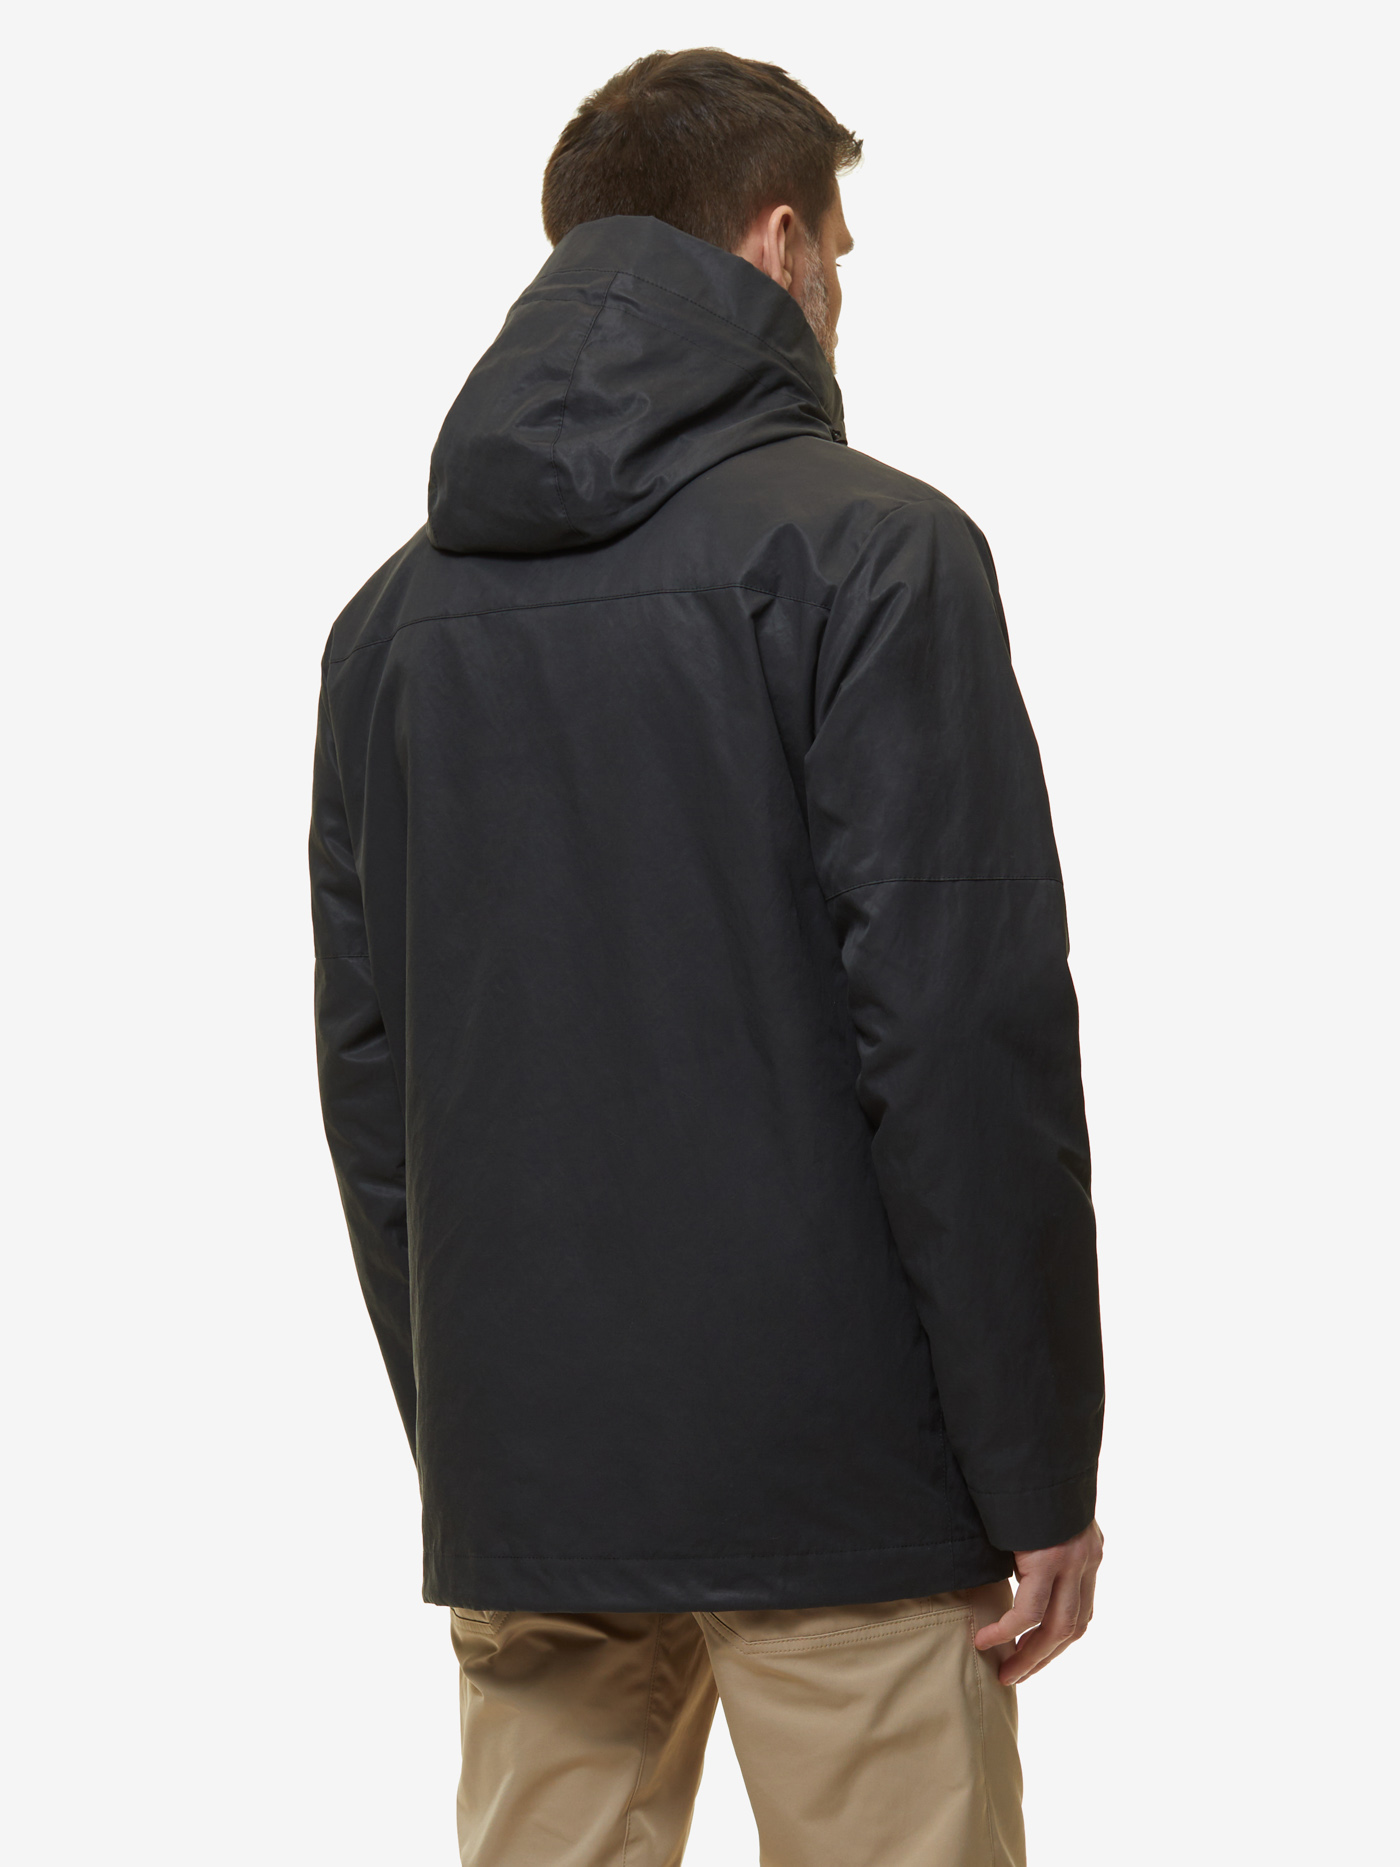 Куртка BASK, размер 50, цвет антрацит 22014-9674-050 Quebec v2 - фото 1